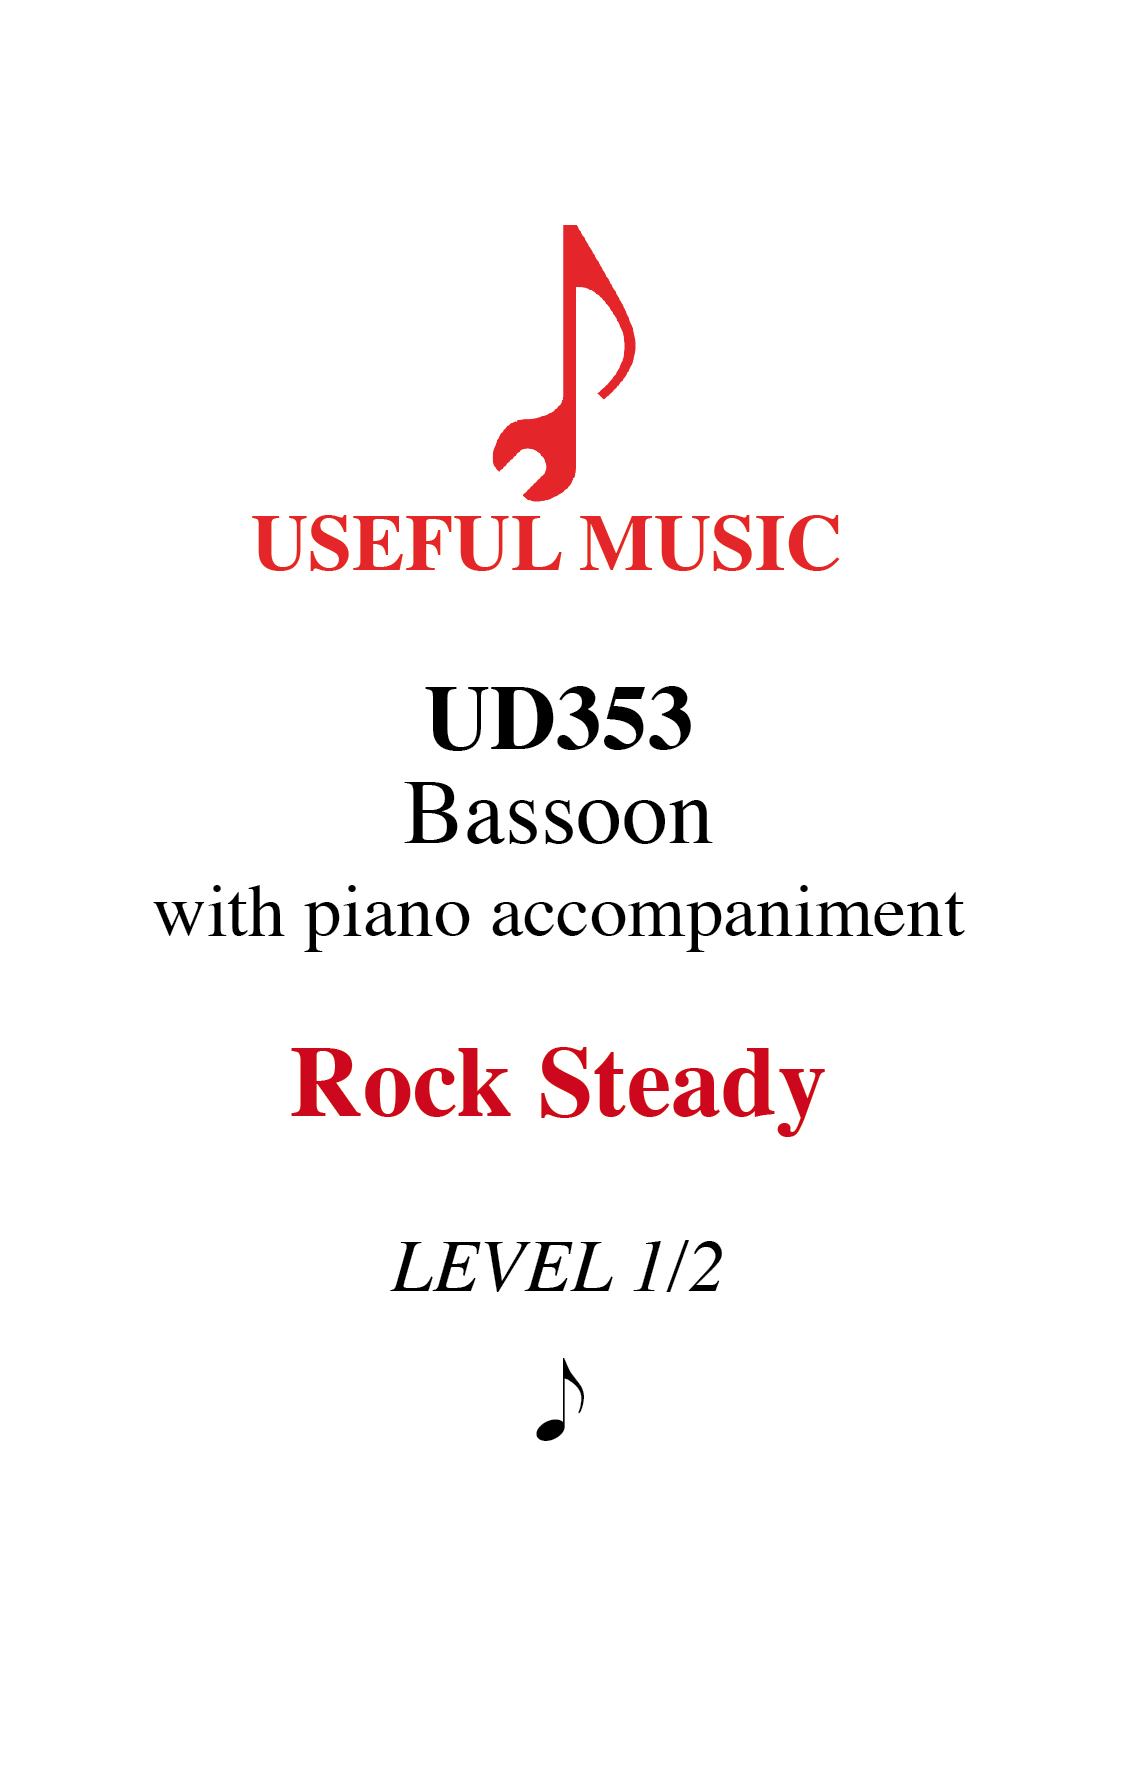 Rock Steady - bassoon with piano accompaniment